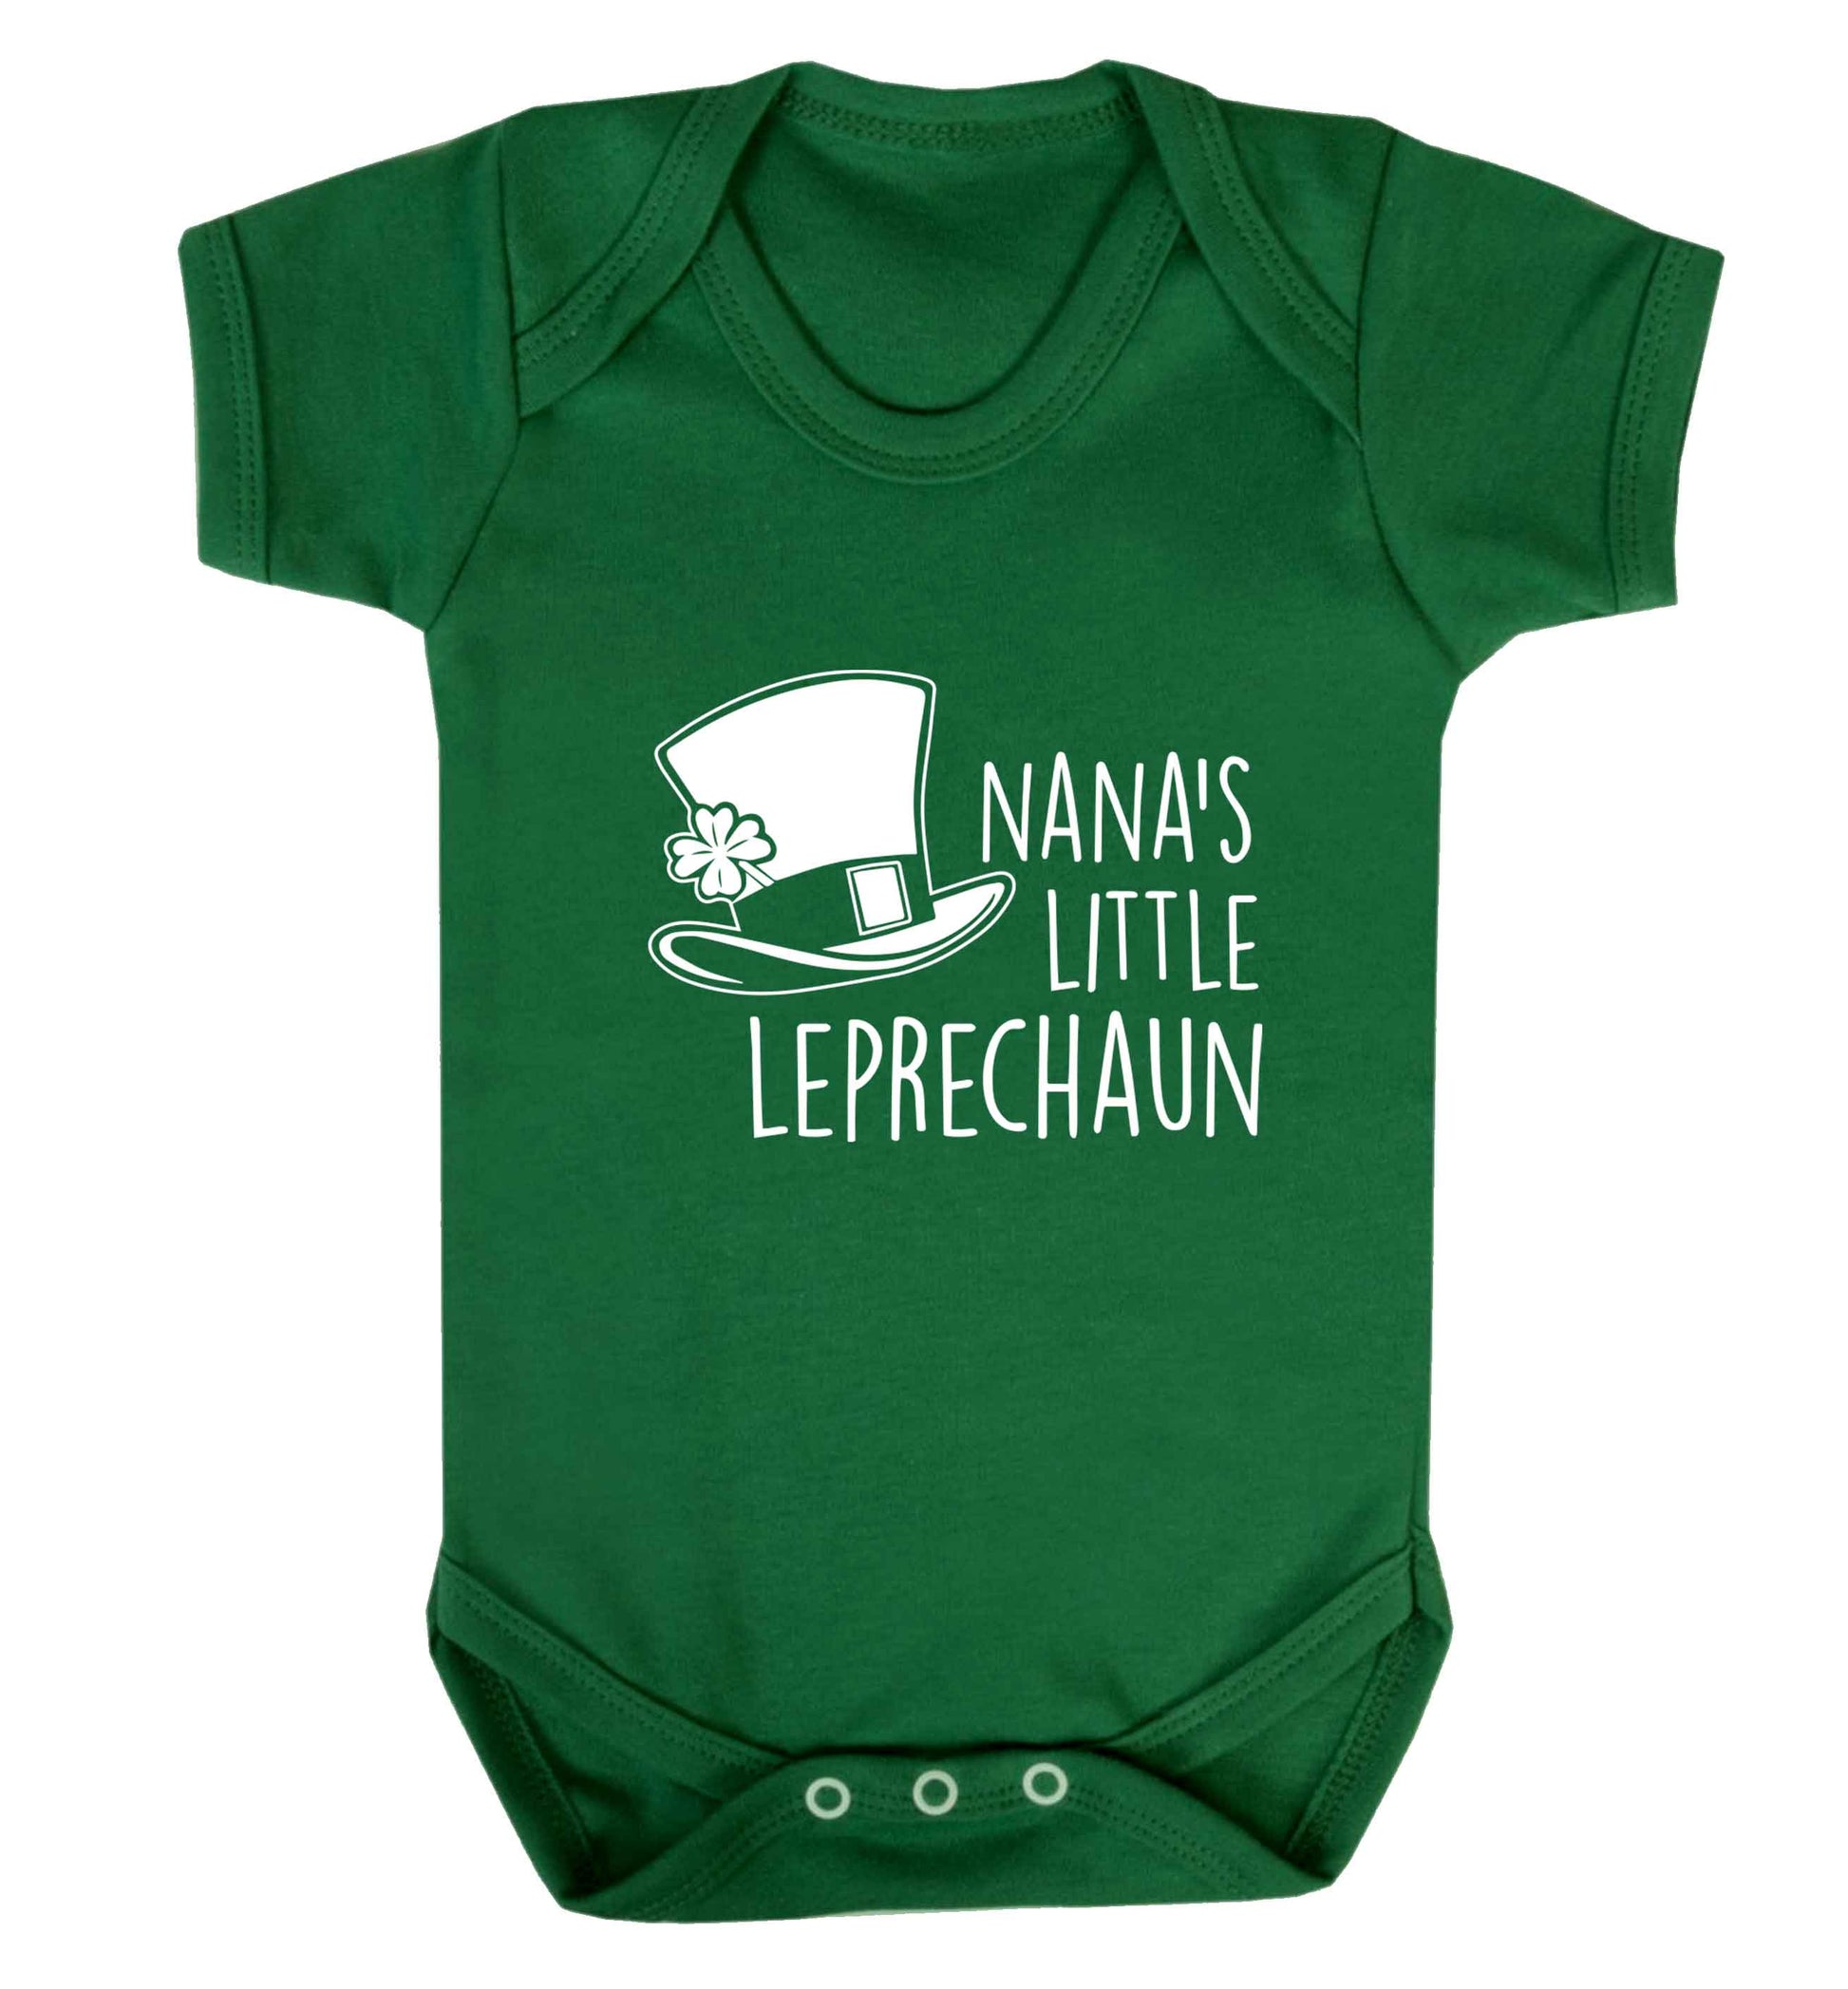 Nana's little leprechaun baby vest green 18-24 months